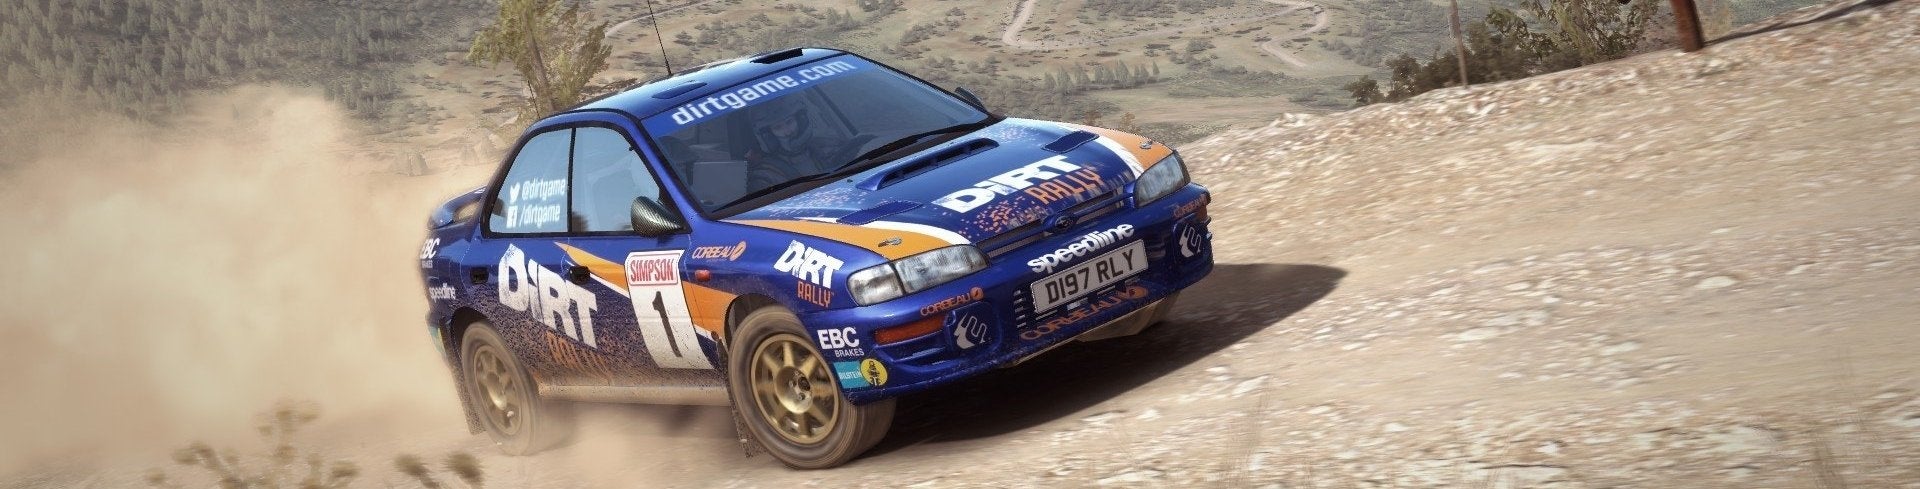 Obrazki dla Dirt Rally nie będzie następcą Colina McRae